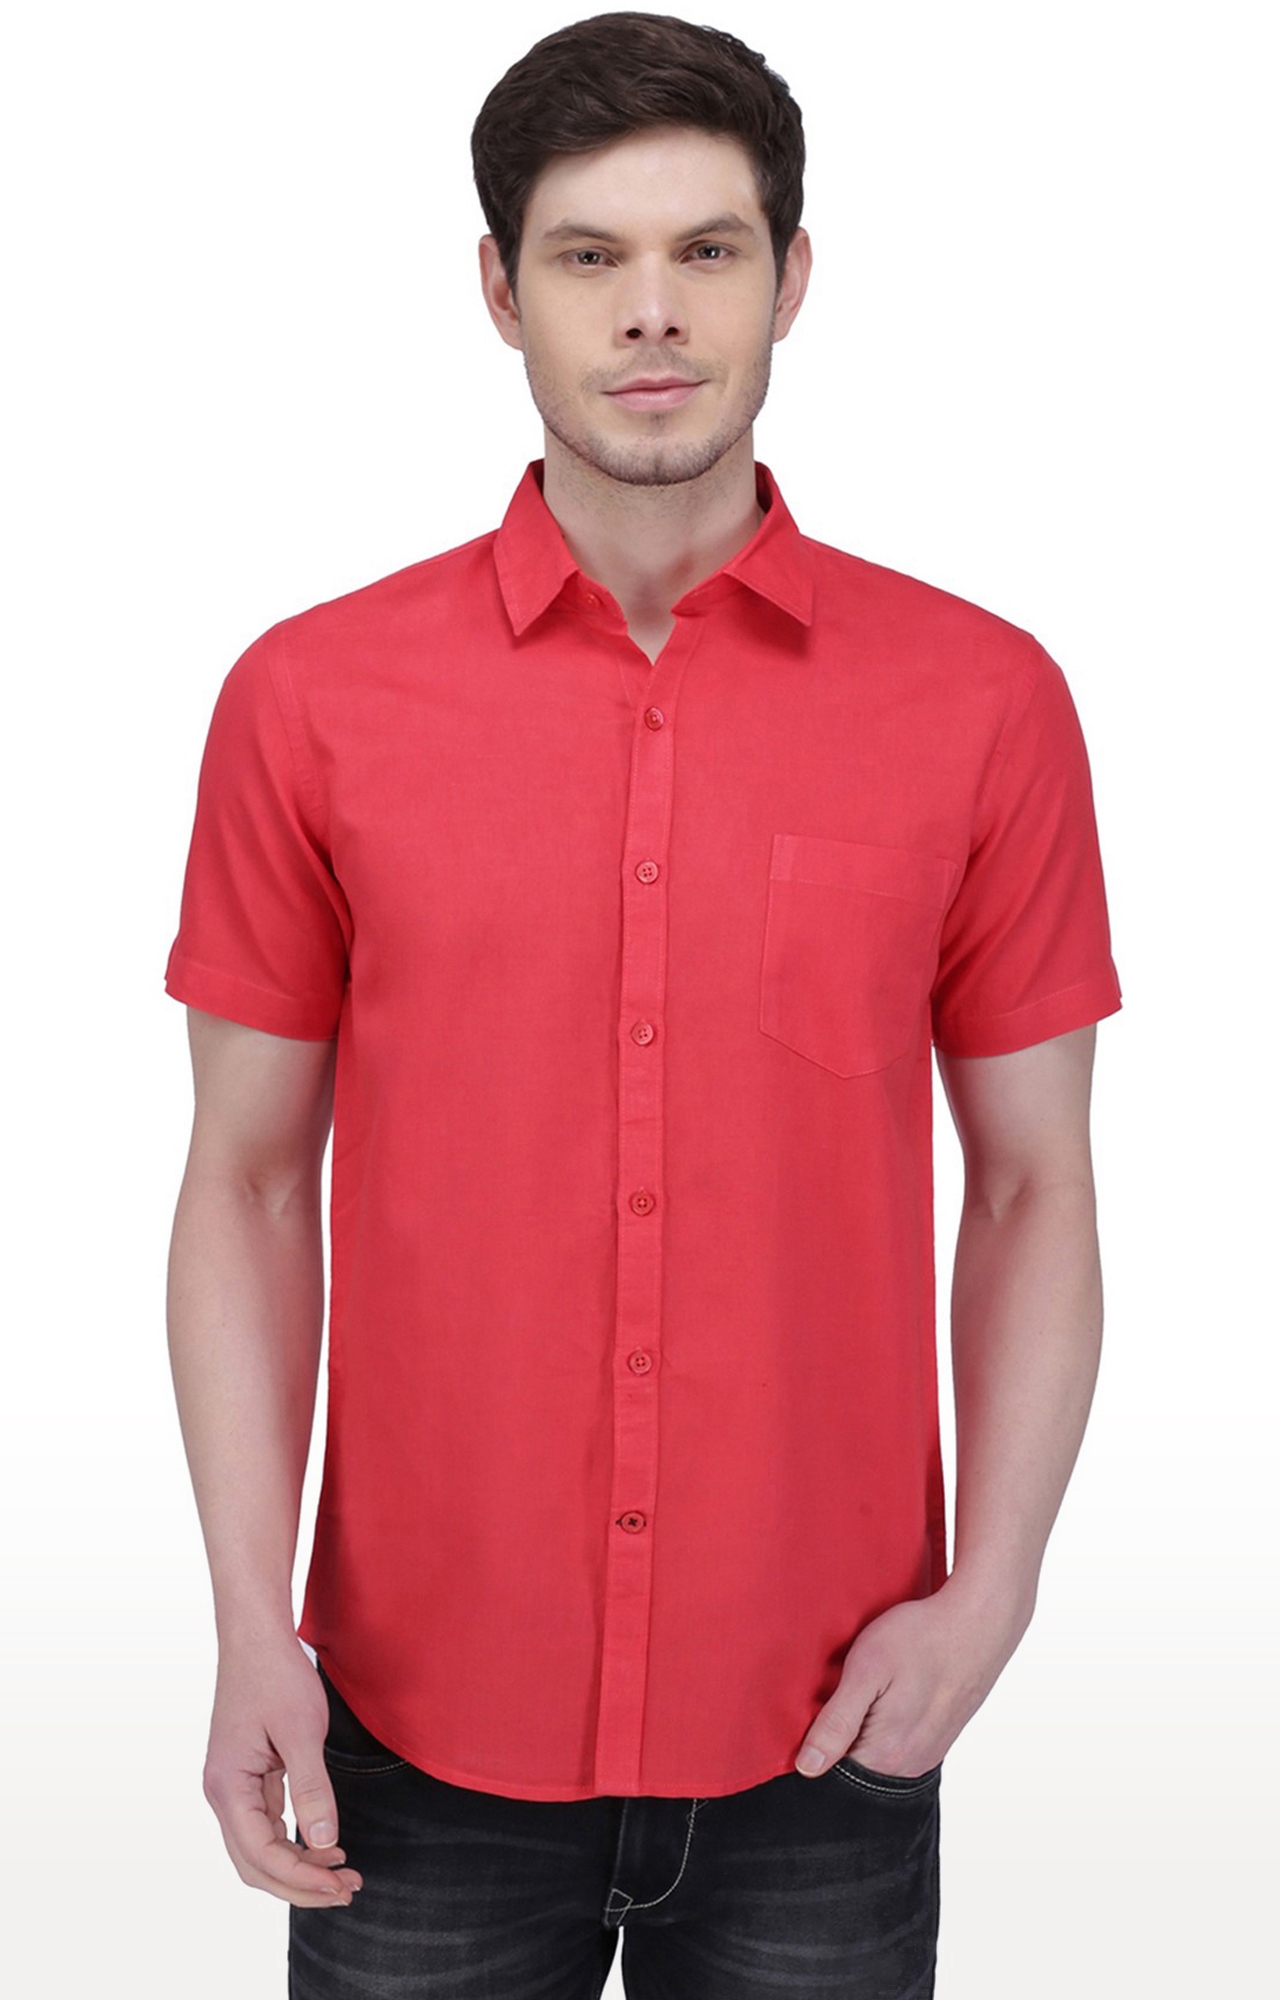 Southbay Men's Salmon Pink Half Sleeve Linen Cotton Formal Shirt